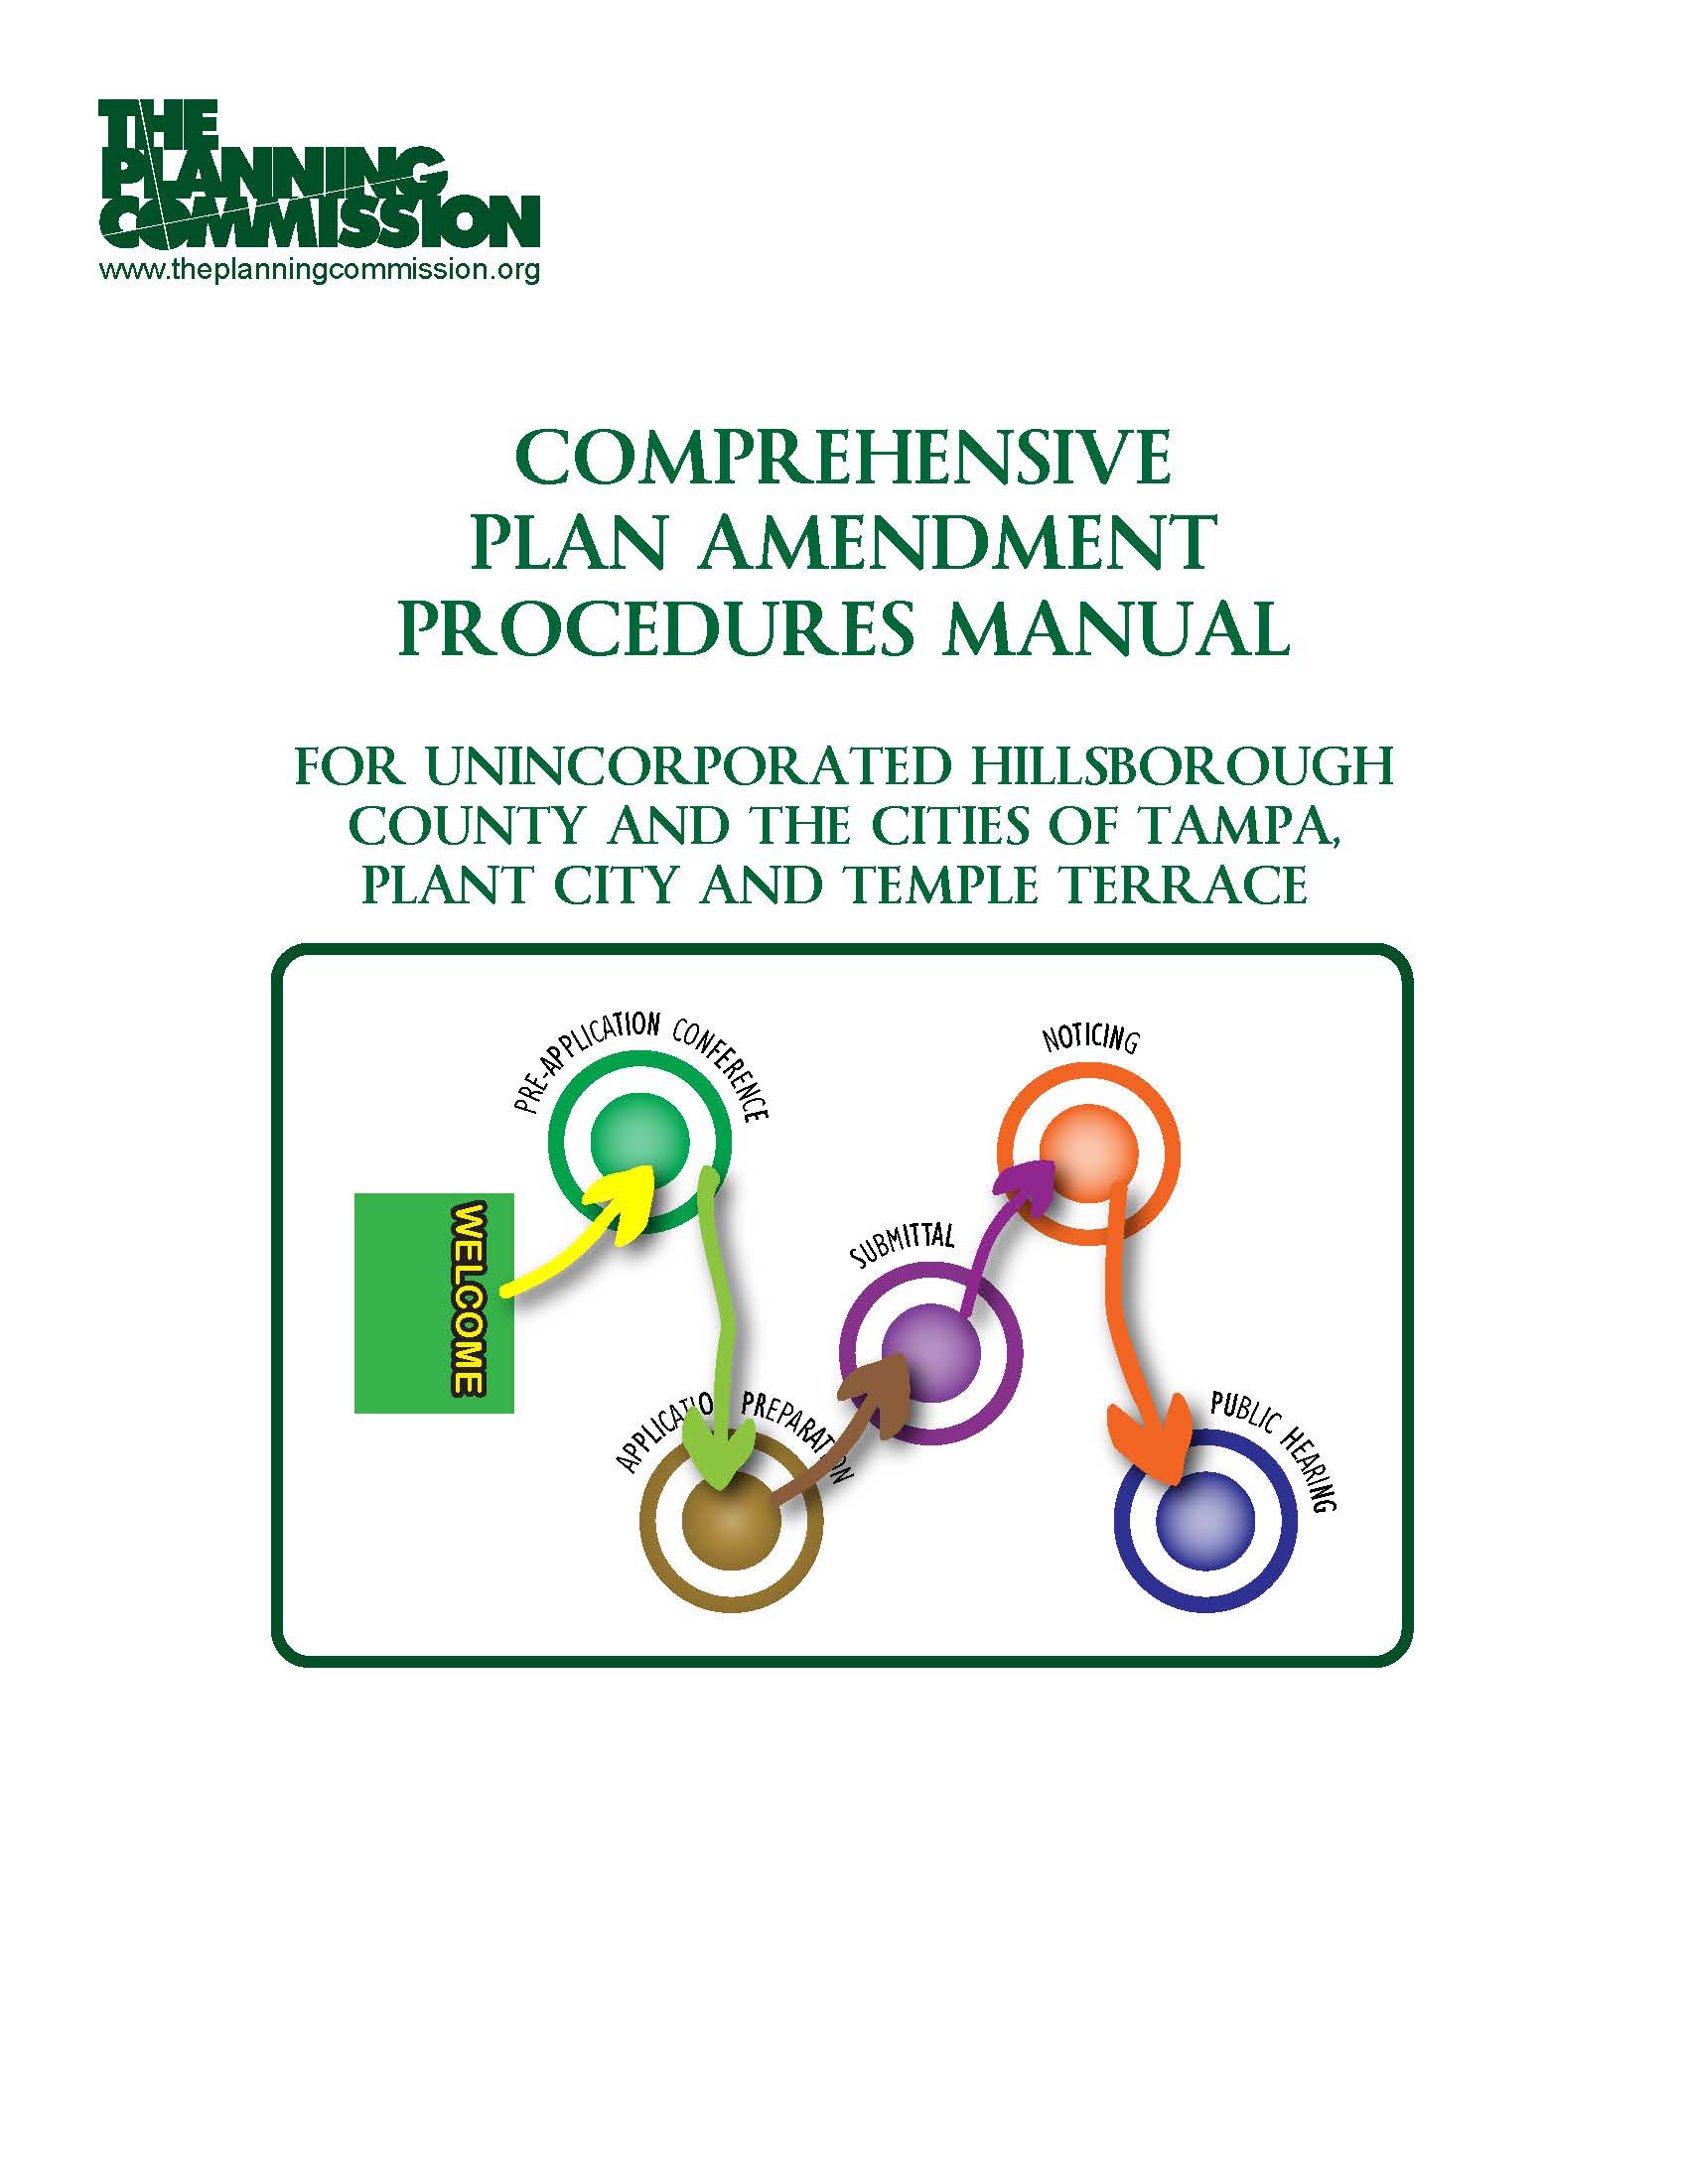 Plan Amendment Procedures Manual for Hillsborough County